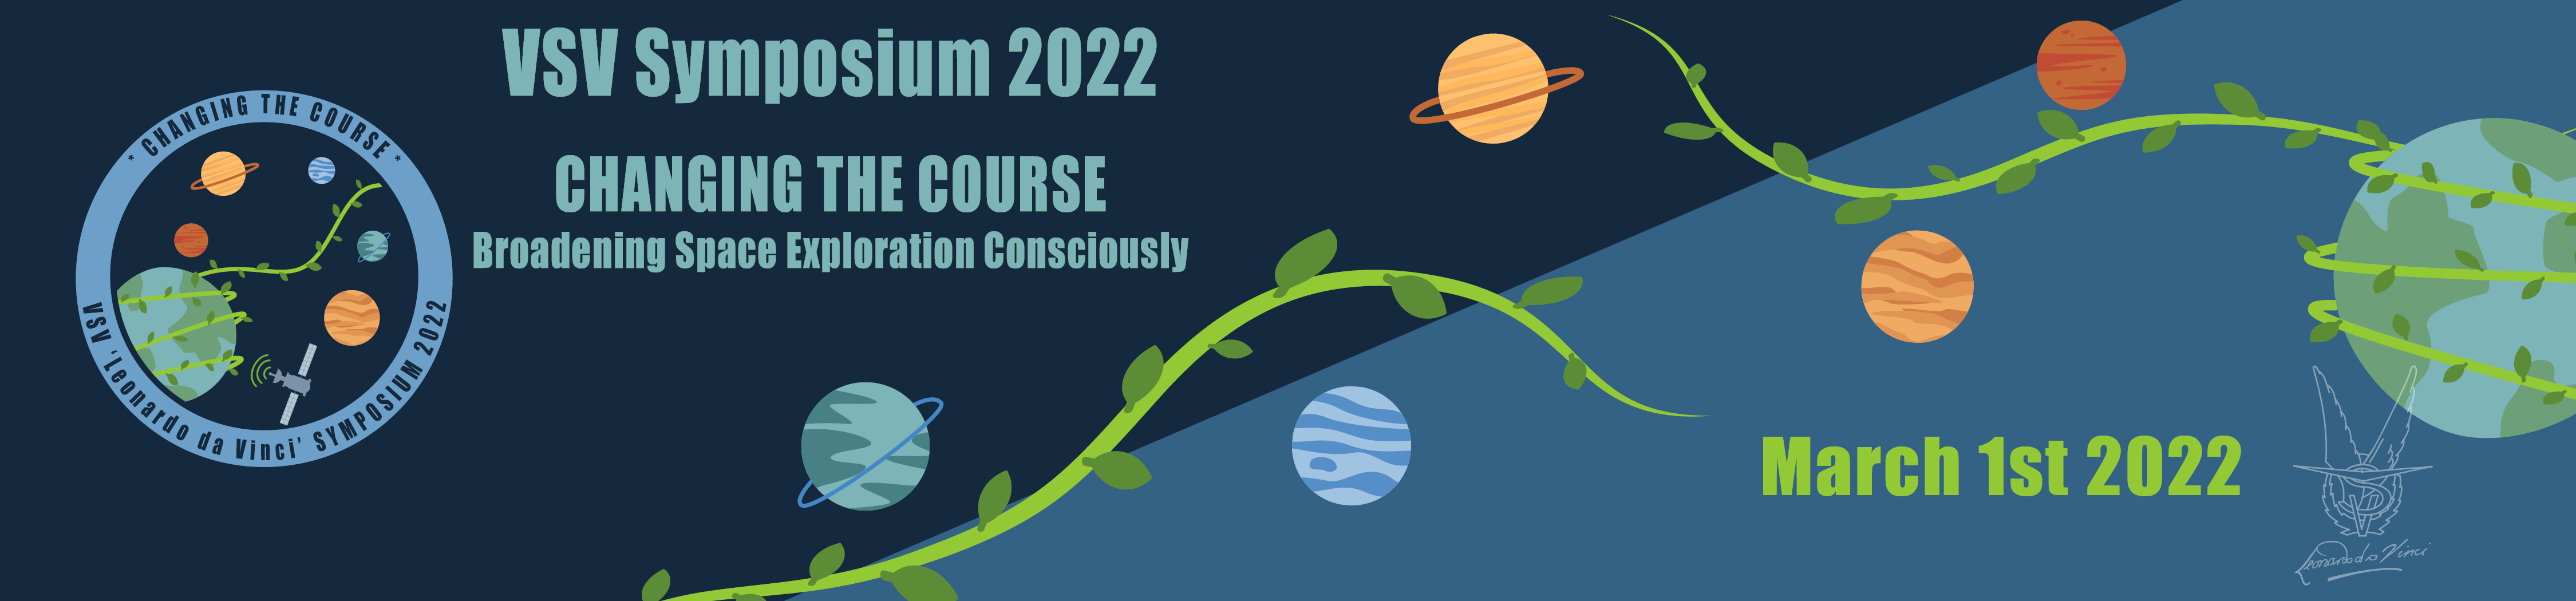 VSV symposium 2022 banner